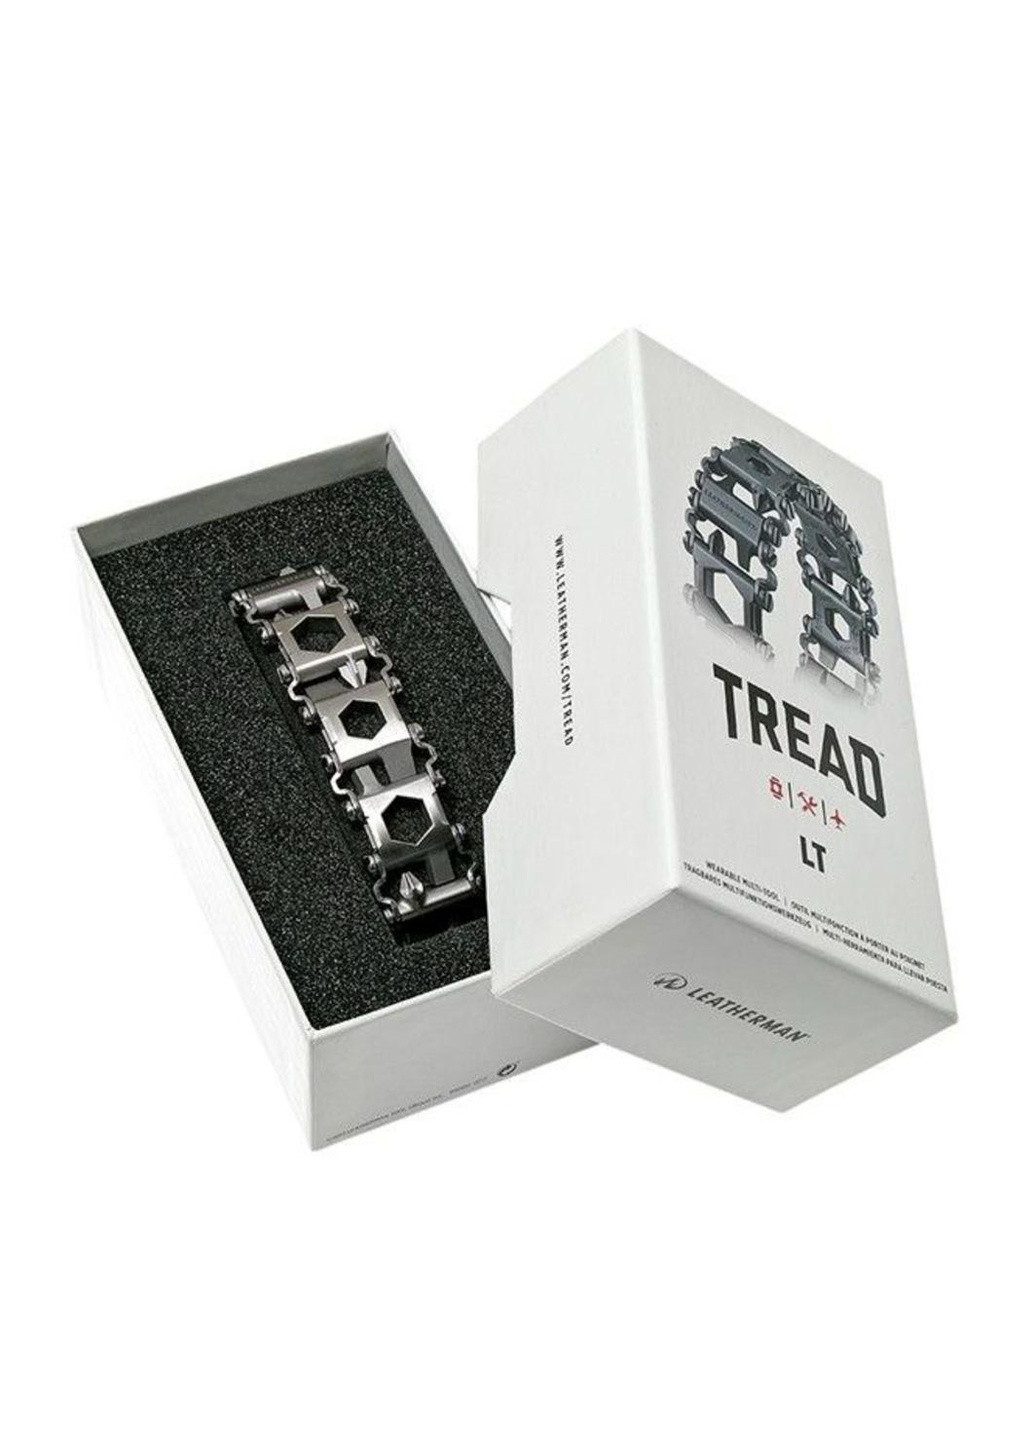 Браслет-мультитул Leatherman Tread Stainless Steel + крепление на часы No Brand (254522488)